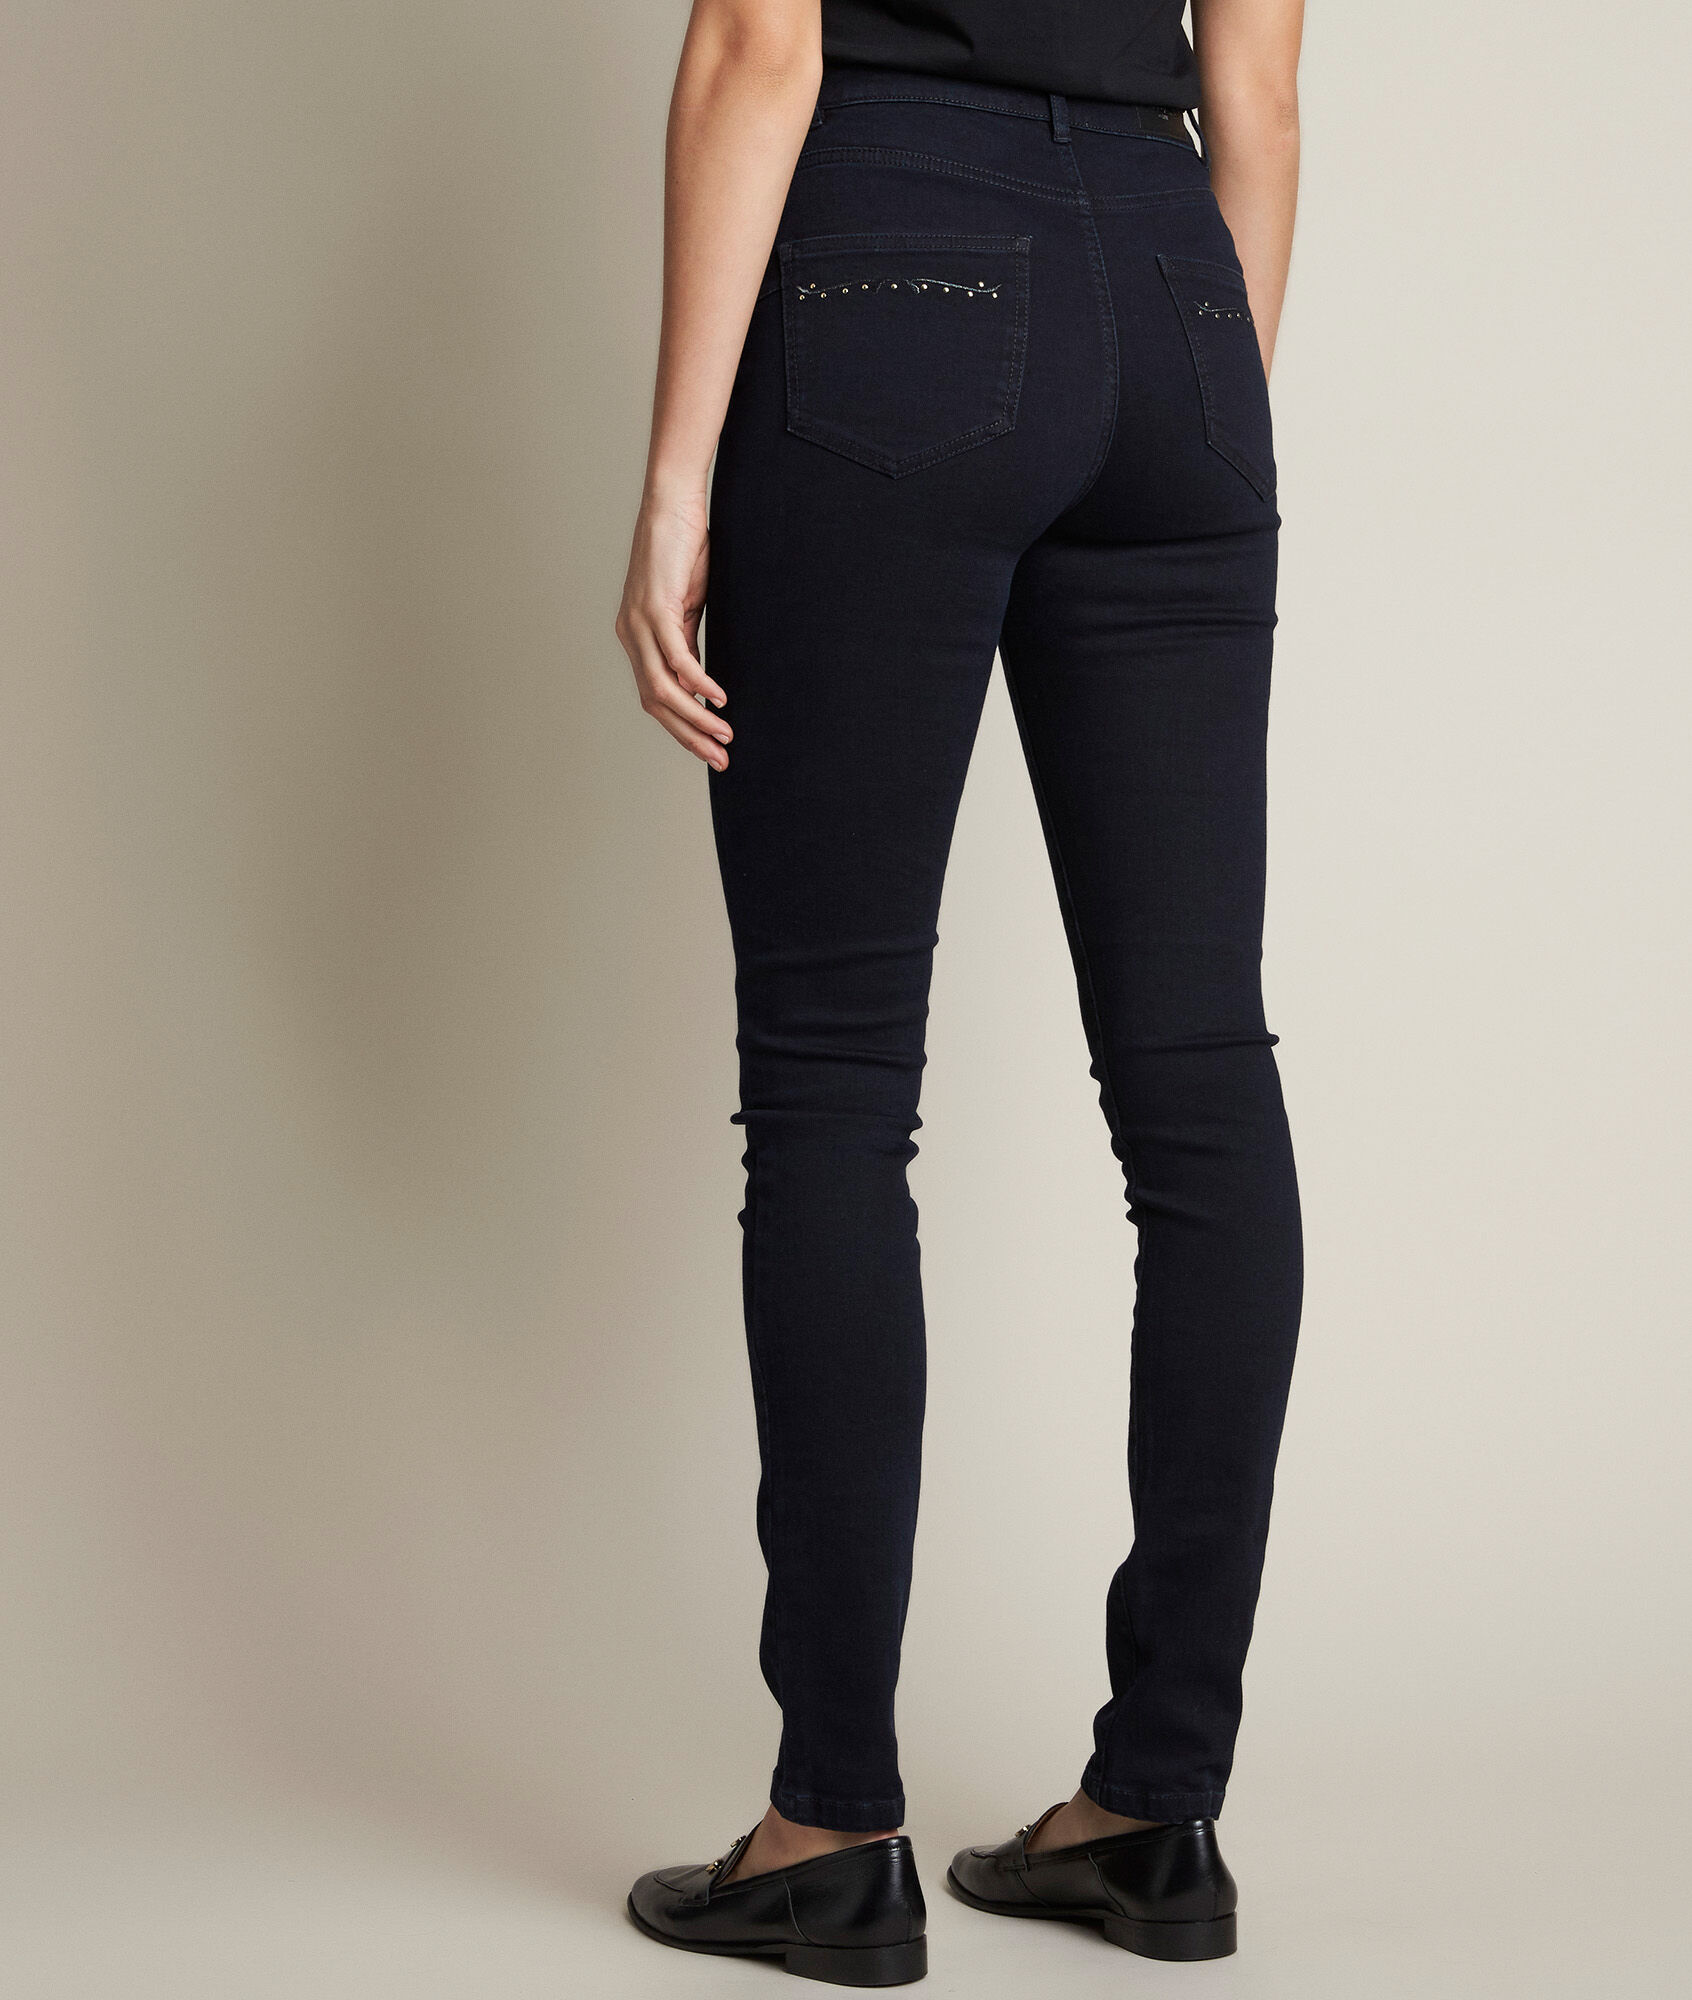 black slim leg jeans womens